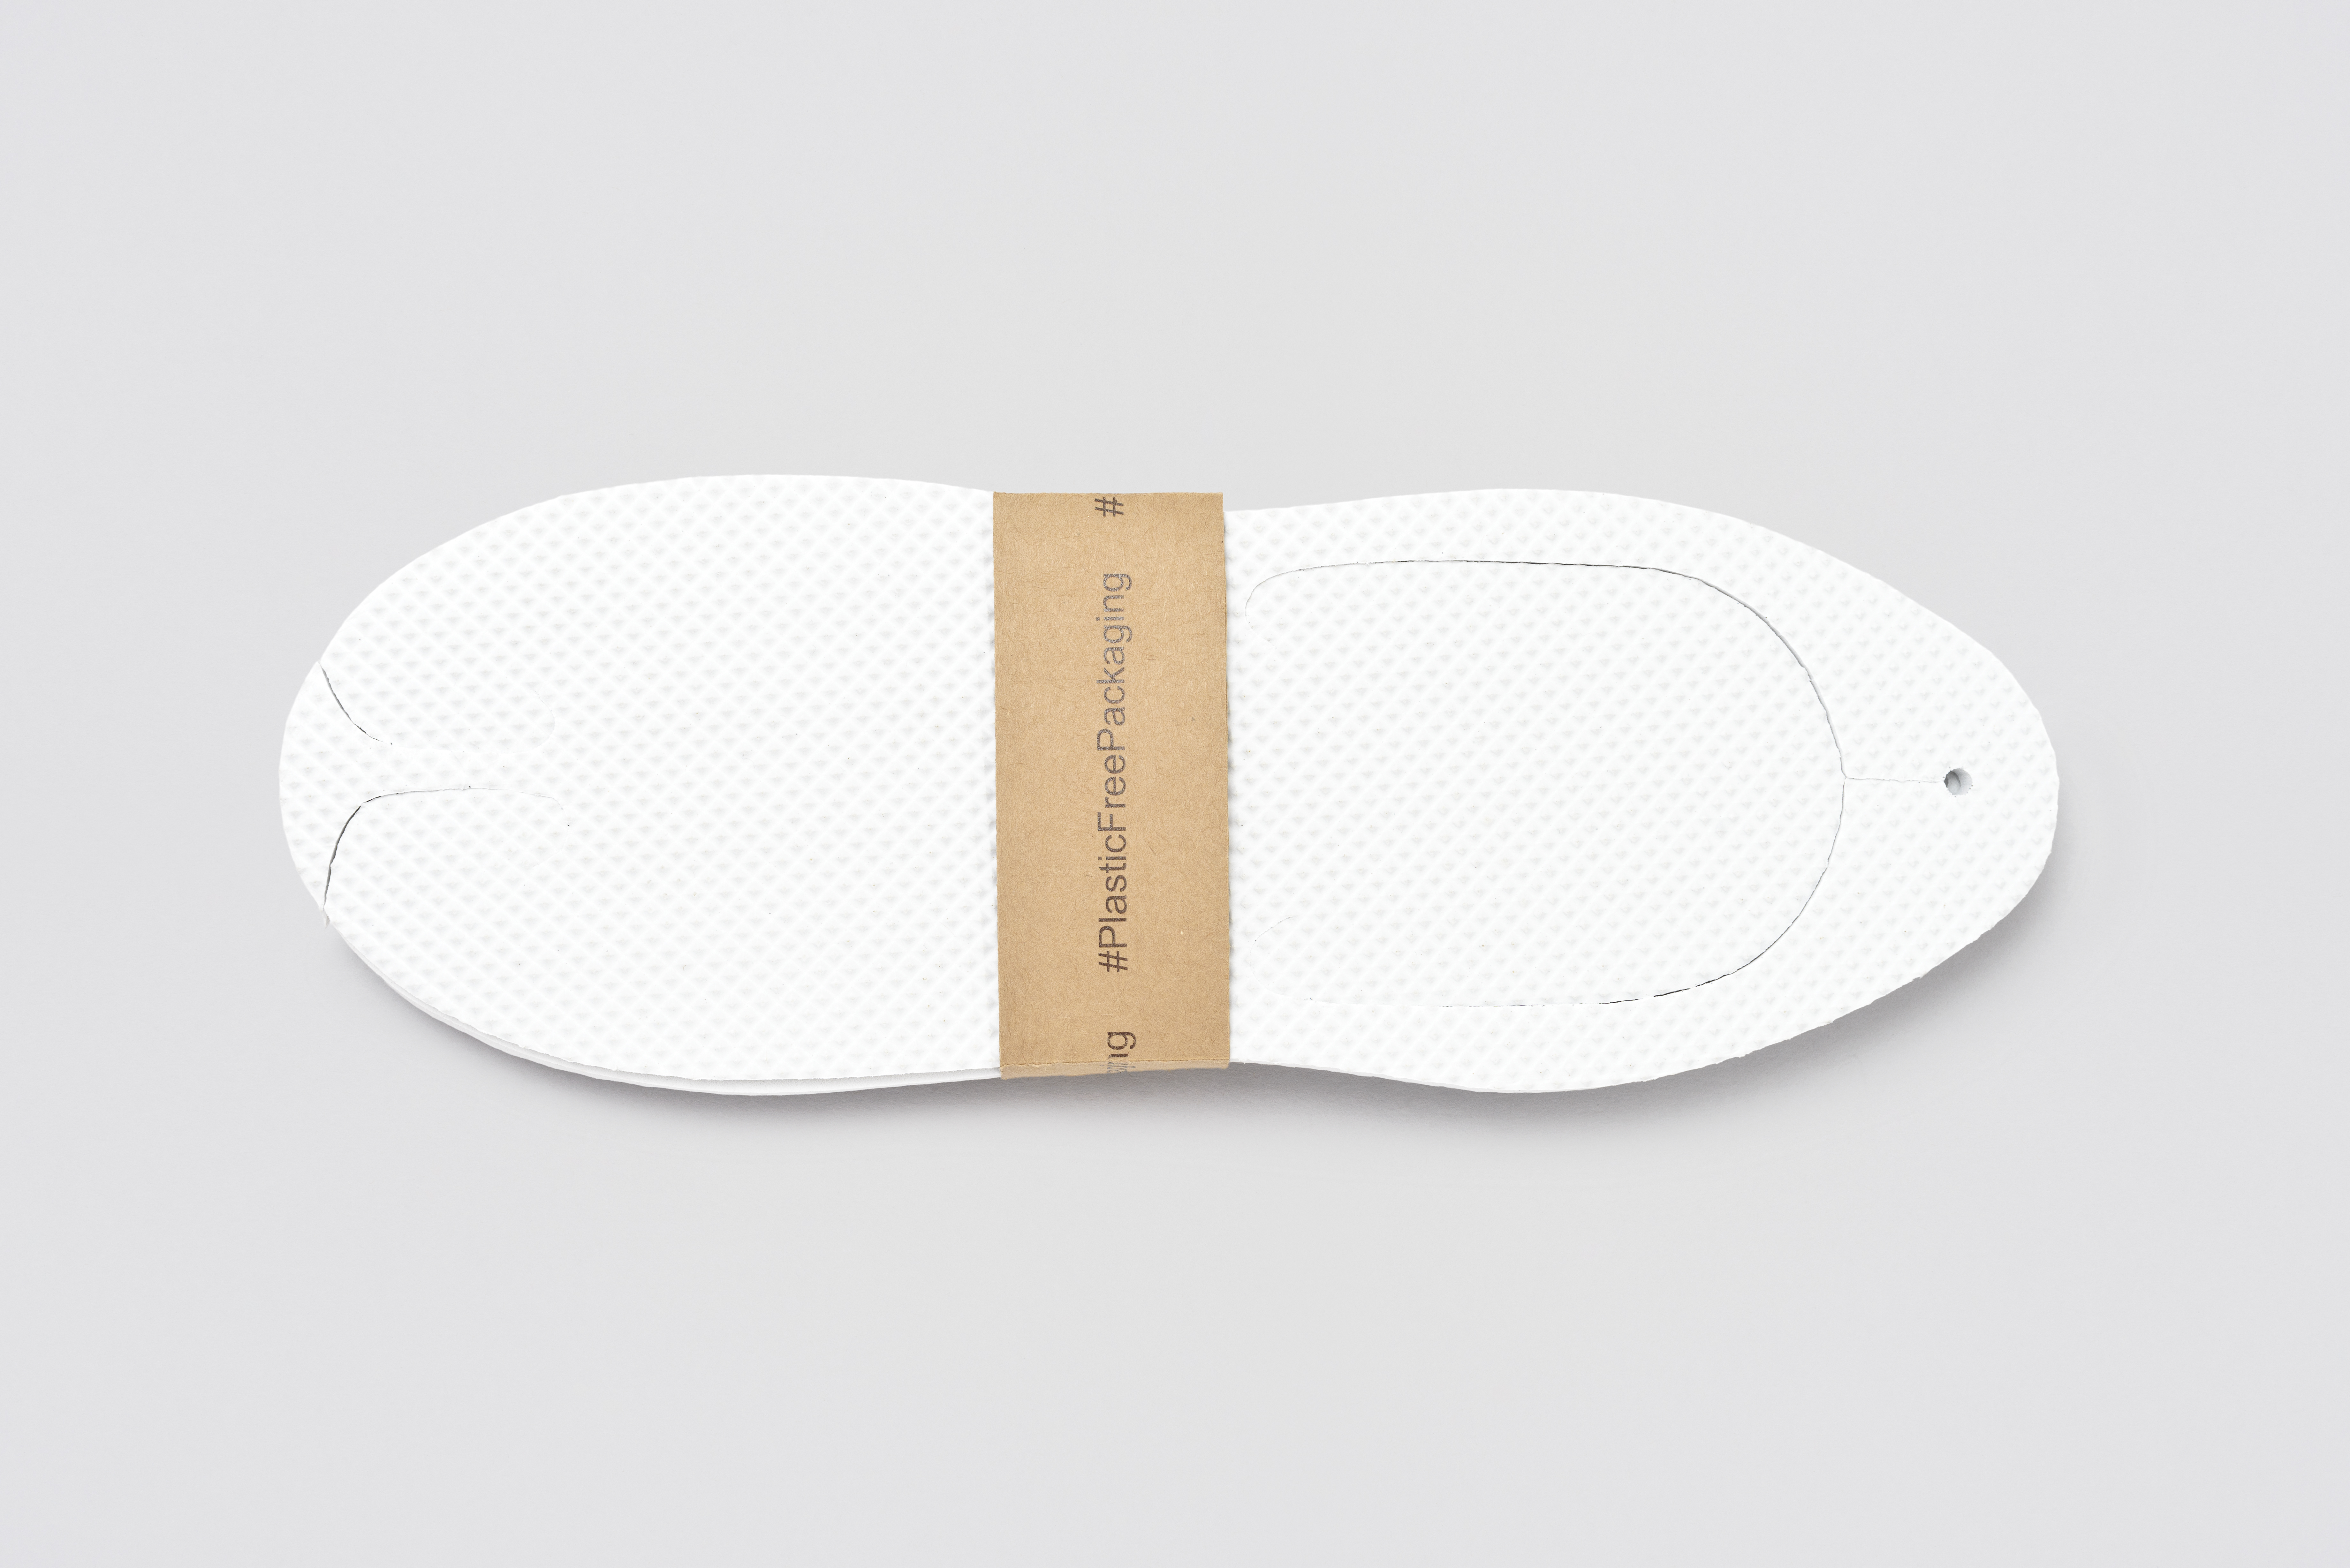 Hammam Sandal, blanca, longitud 28,2cm, #PlasticFreePackaging